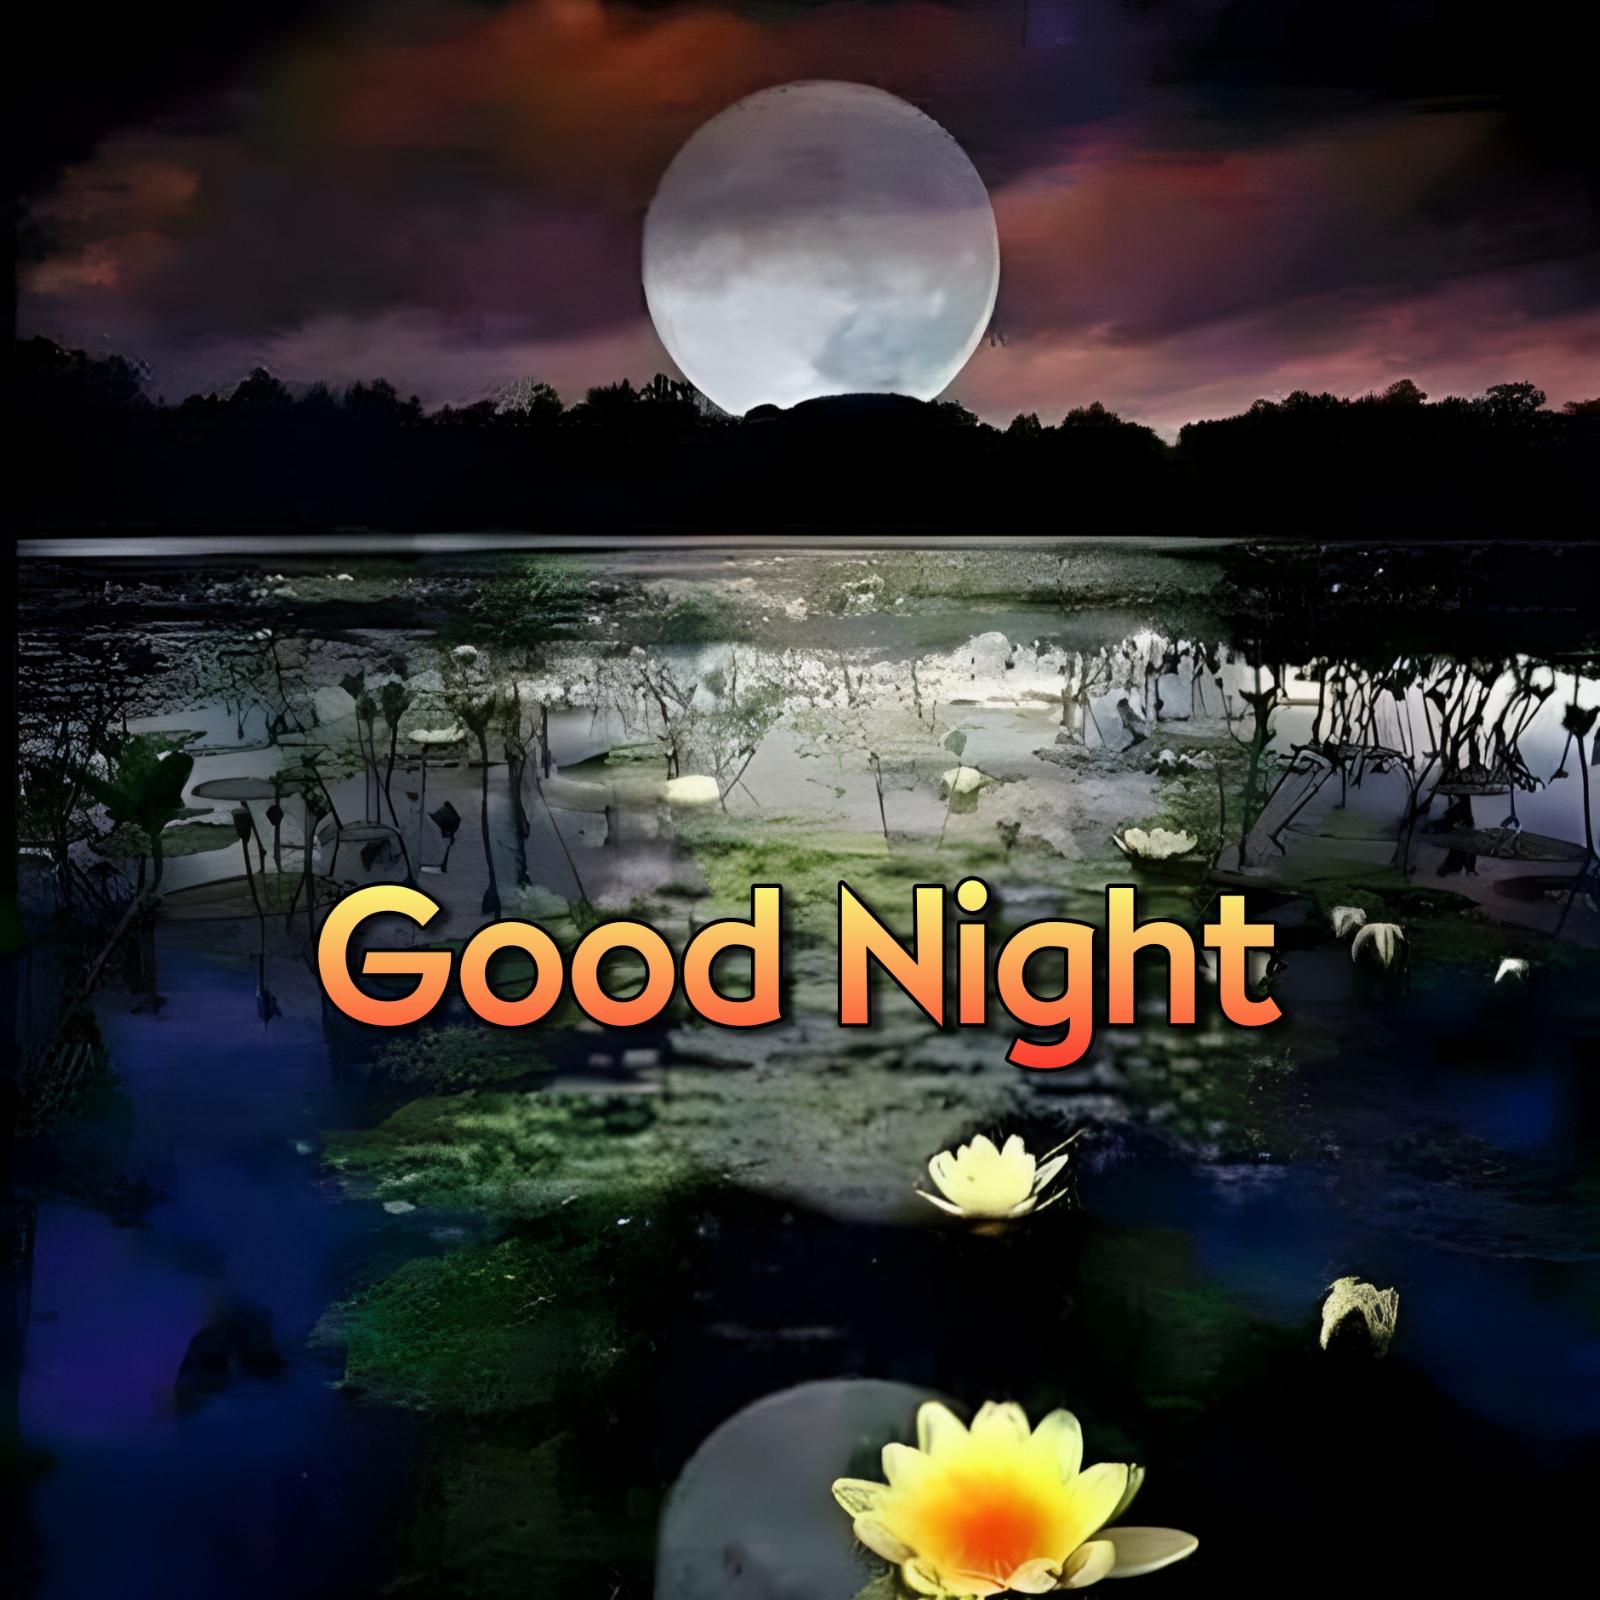 Good Night Image Of Moon